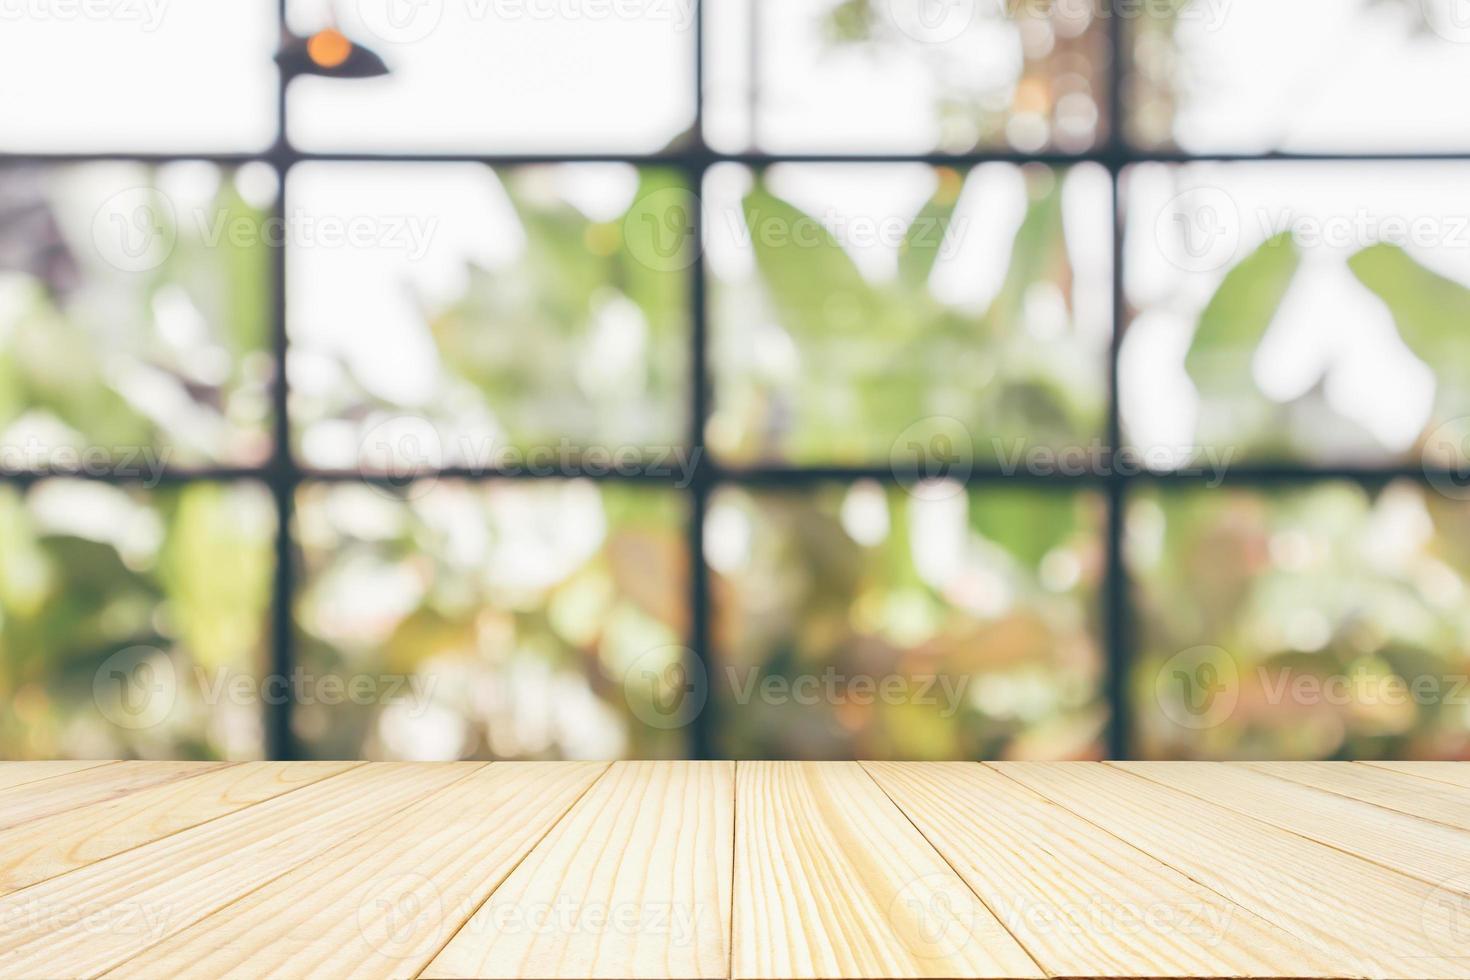 mesa de madera vacía con cafetería restaurante o ventana de cafetería interior borroso abstracto desenfocado con fondo de luz bokeh para exhibición de productos de montaje foto